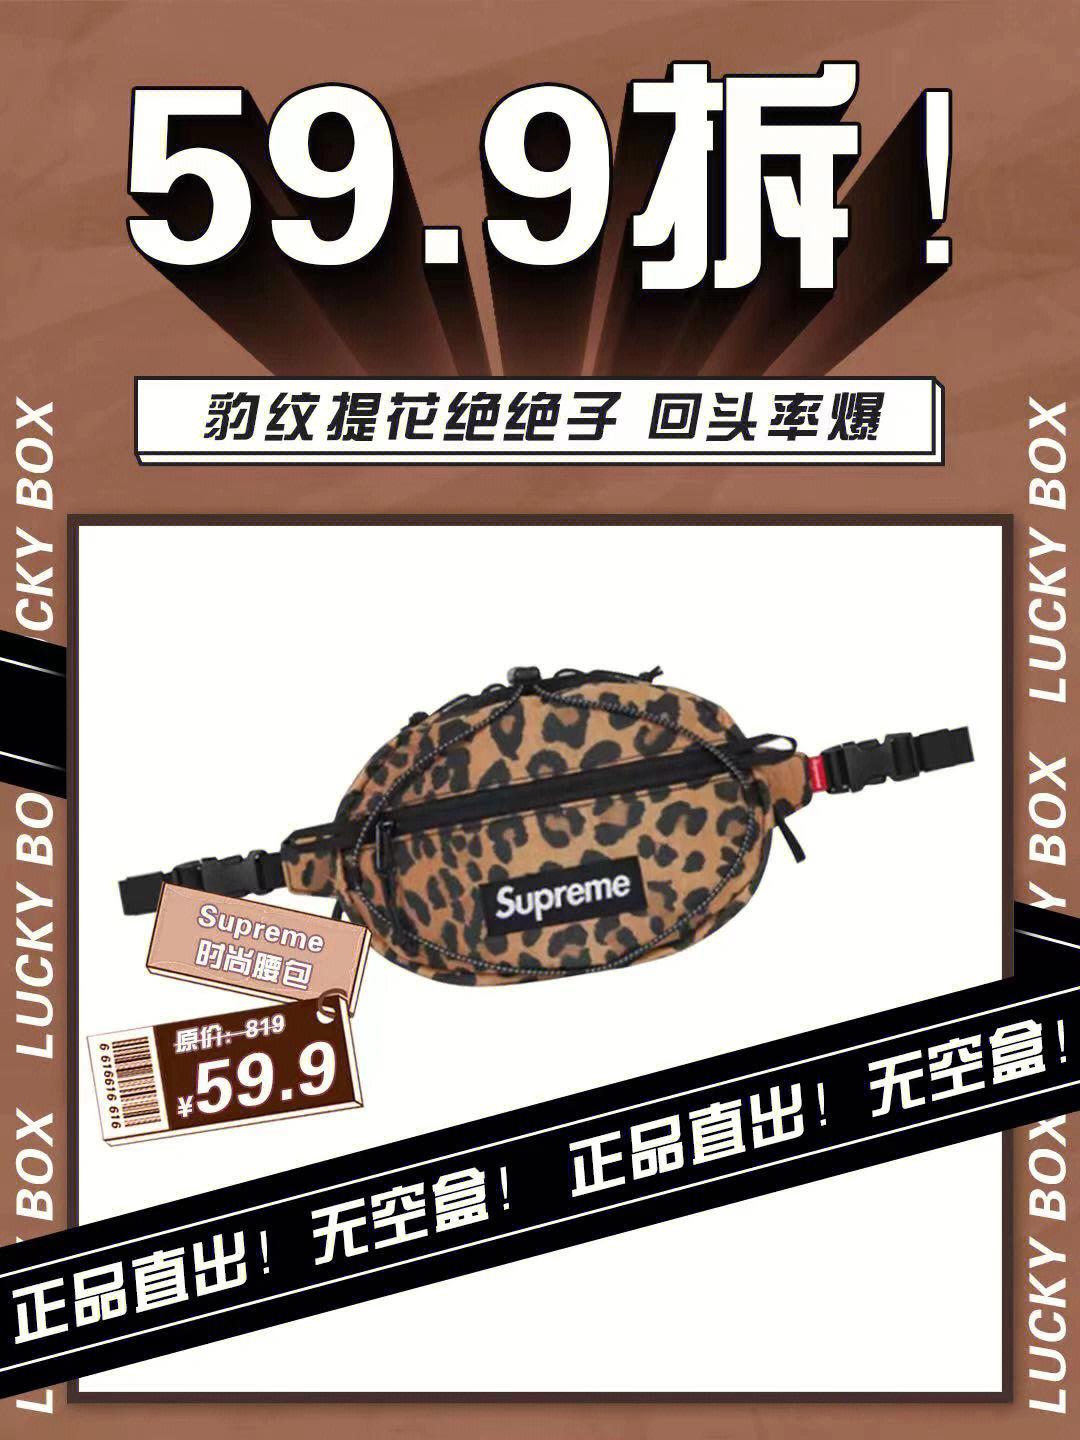 supreme豹纹腰包图片